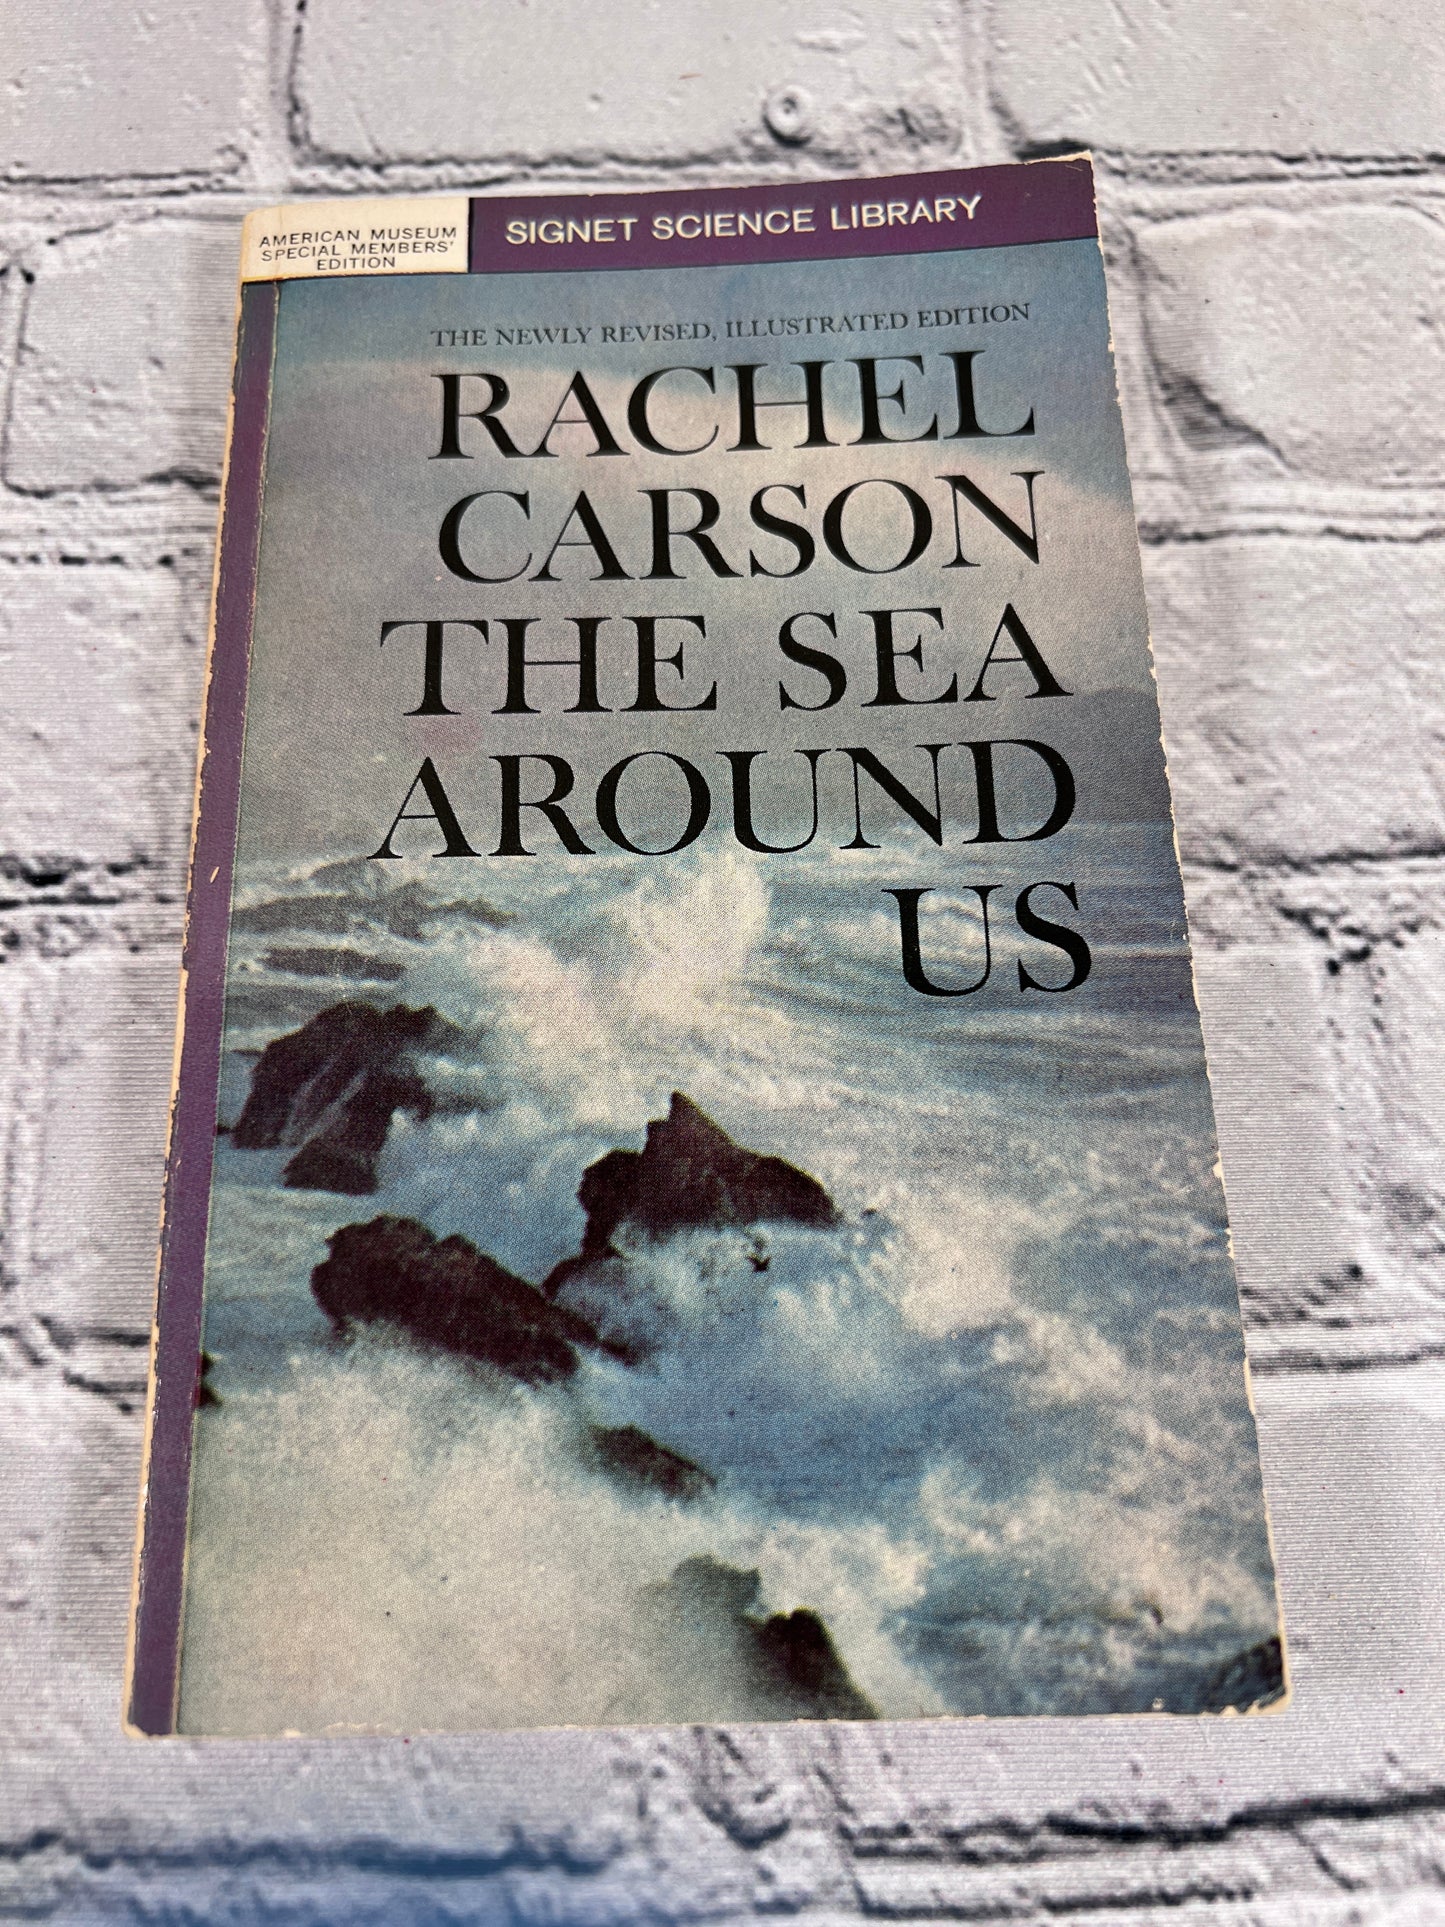 The Sea Around Us by Rachel L. Carson [1961 · 19th Printing]